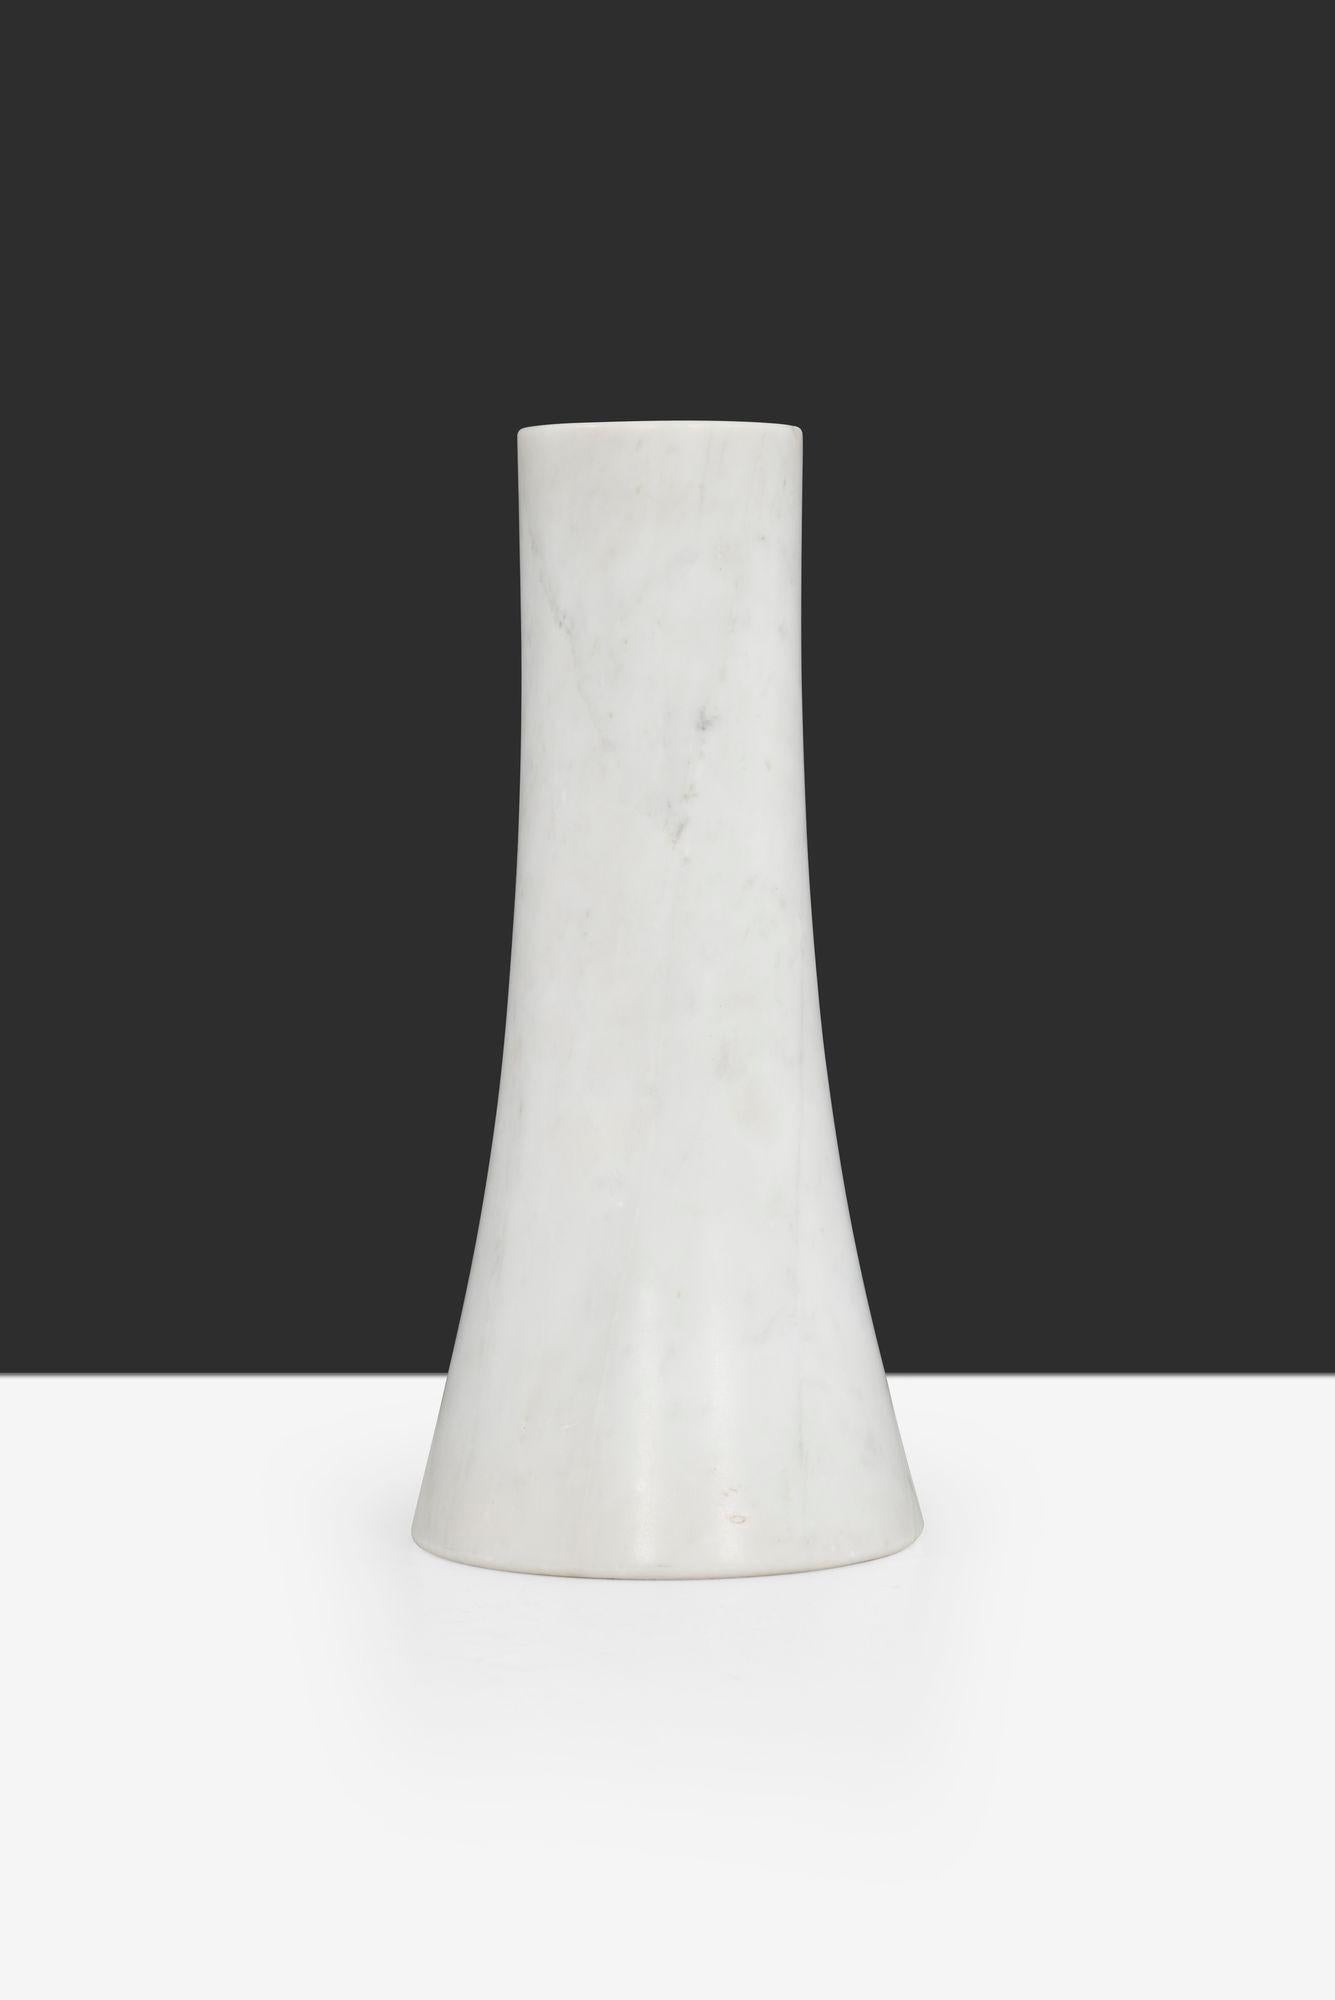 Angelo Mangiarotti für Skipper Vase aus Carrara-Marmor.